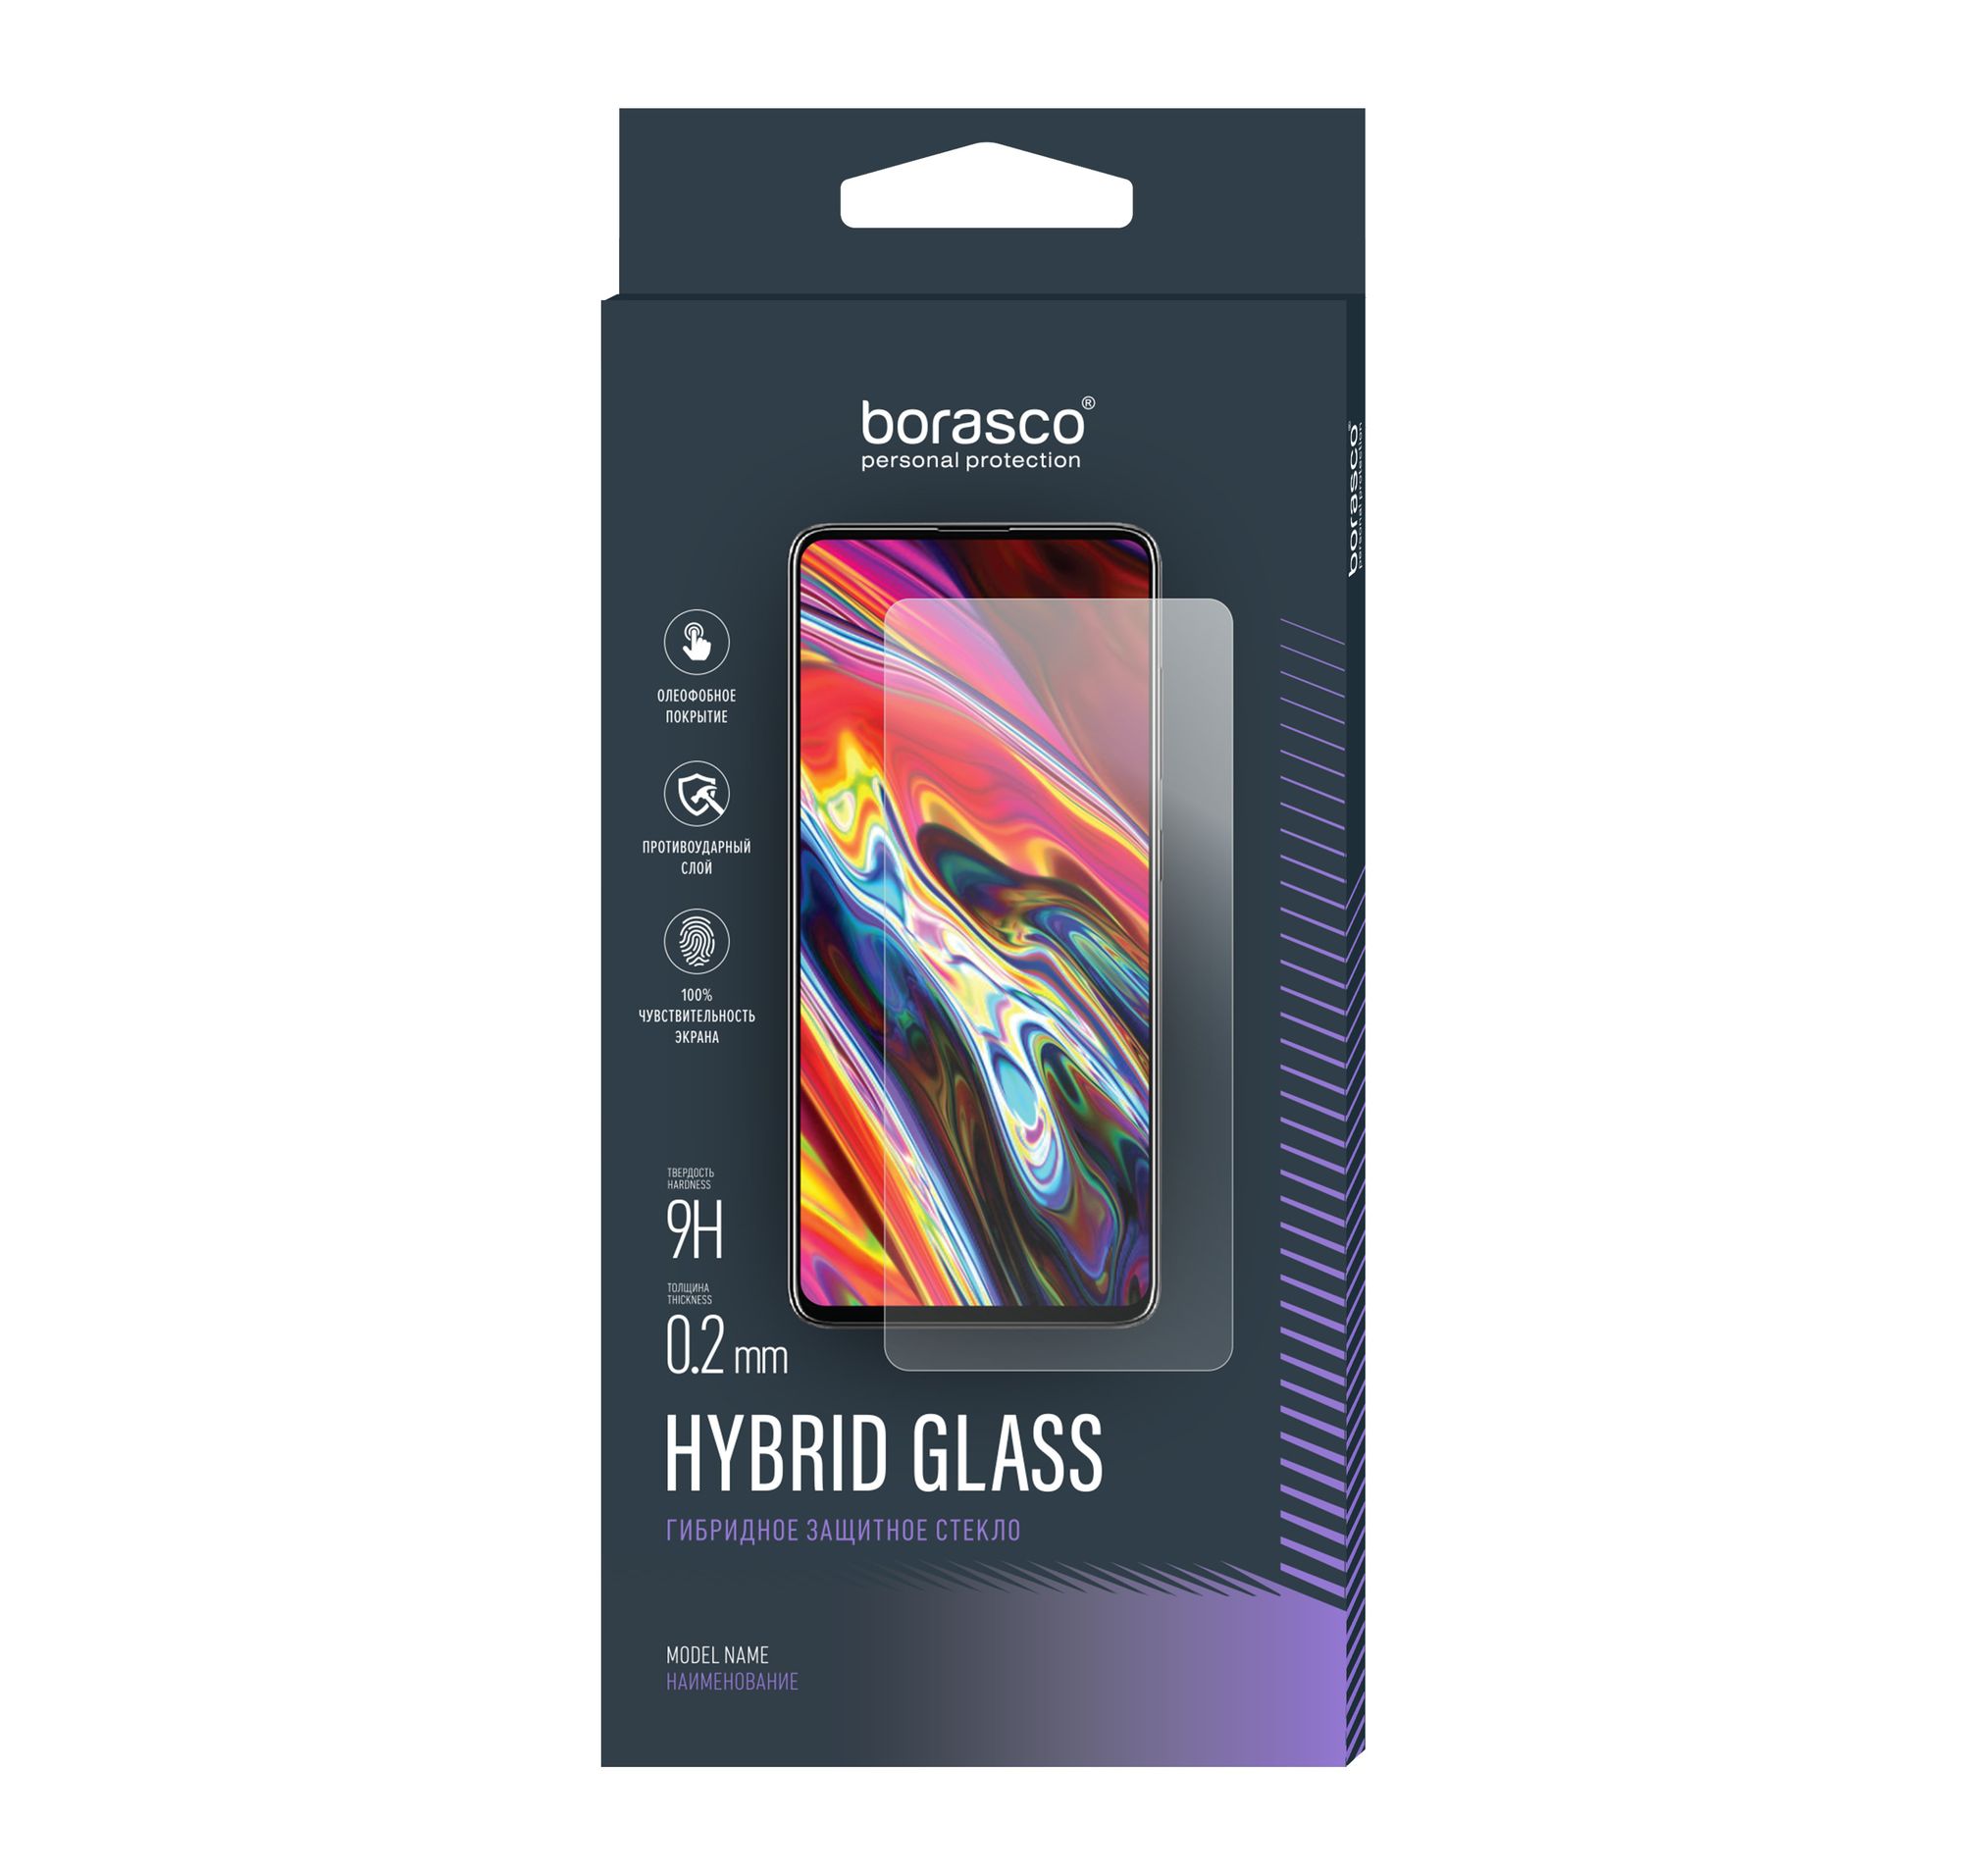 Стекло защитное Hybrid Glass VSP 0,26 мм для Sony Xperia XA1 гибридное защитное стекло krutoff для sony xperia xa1 matte 287887